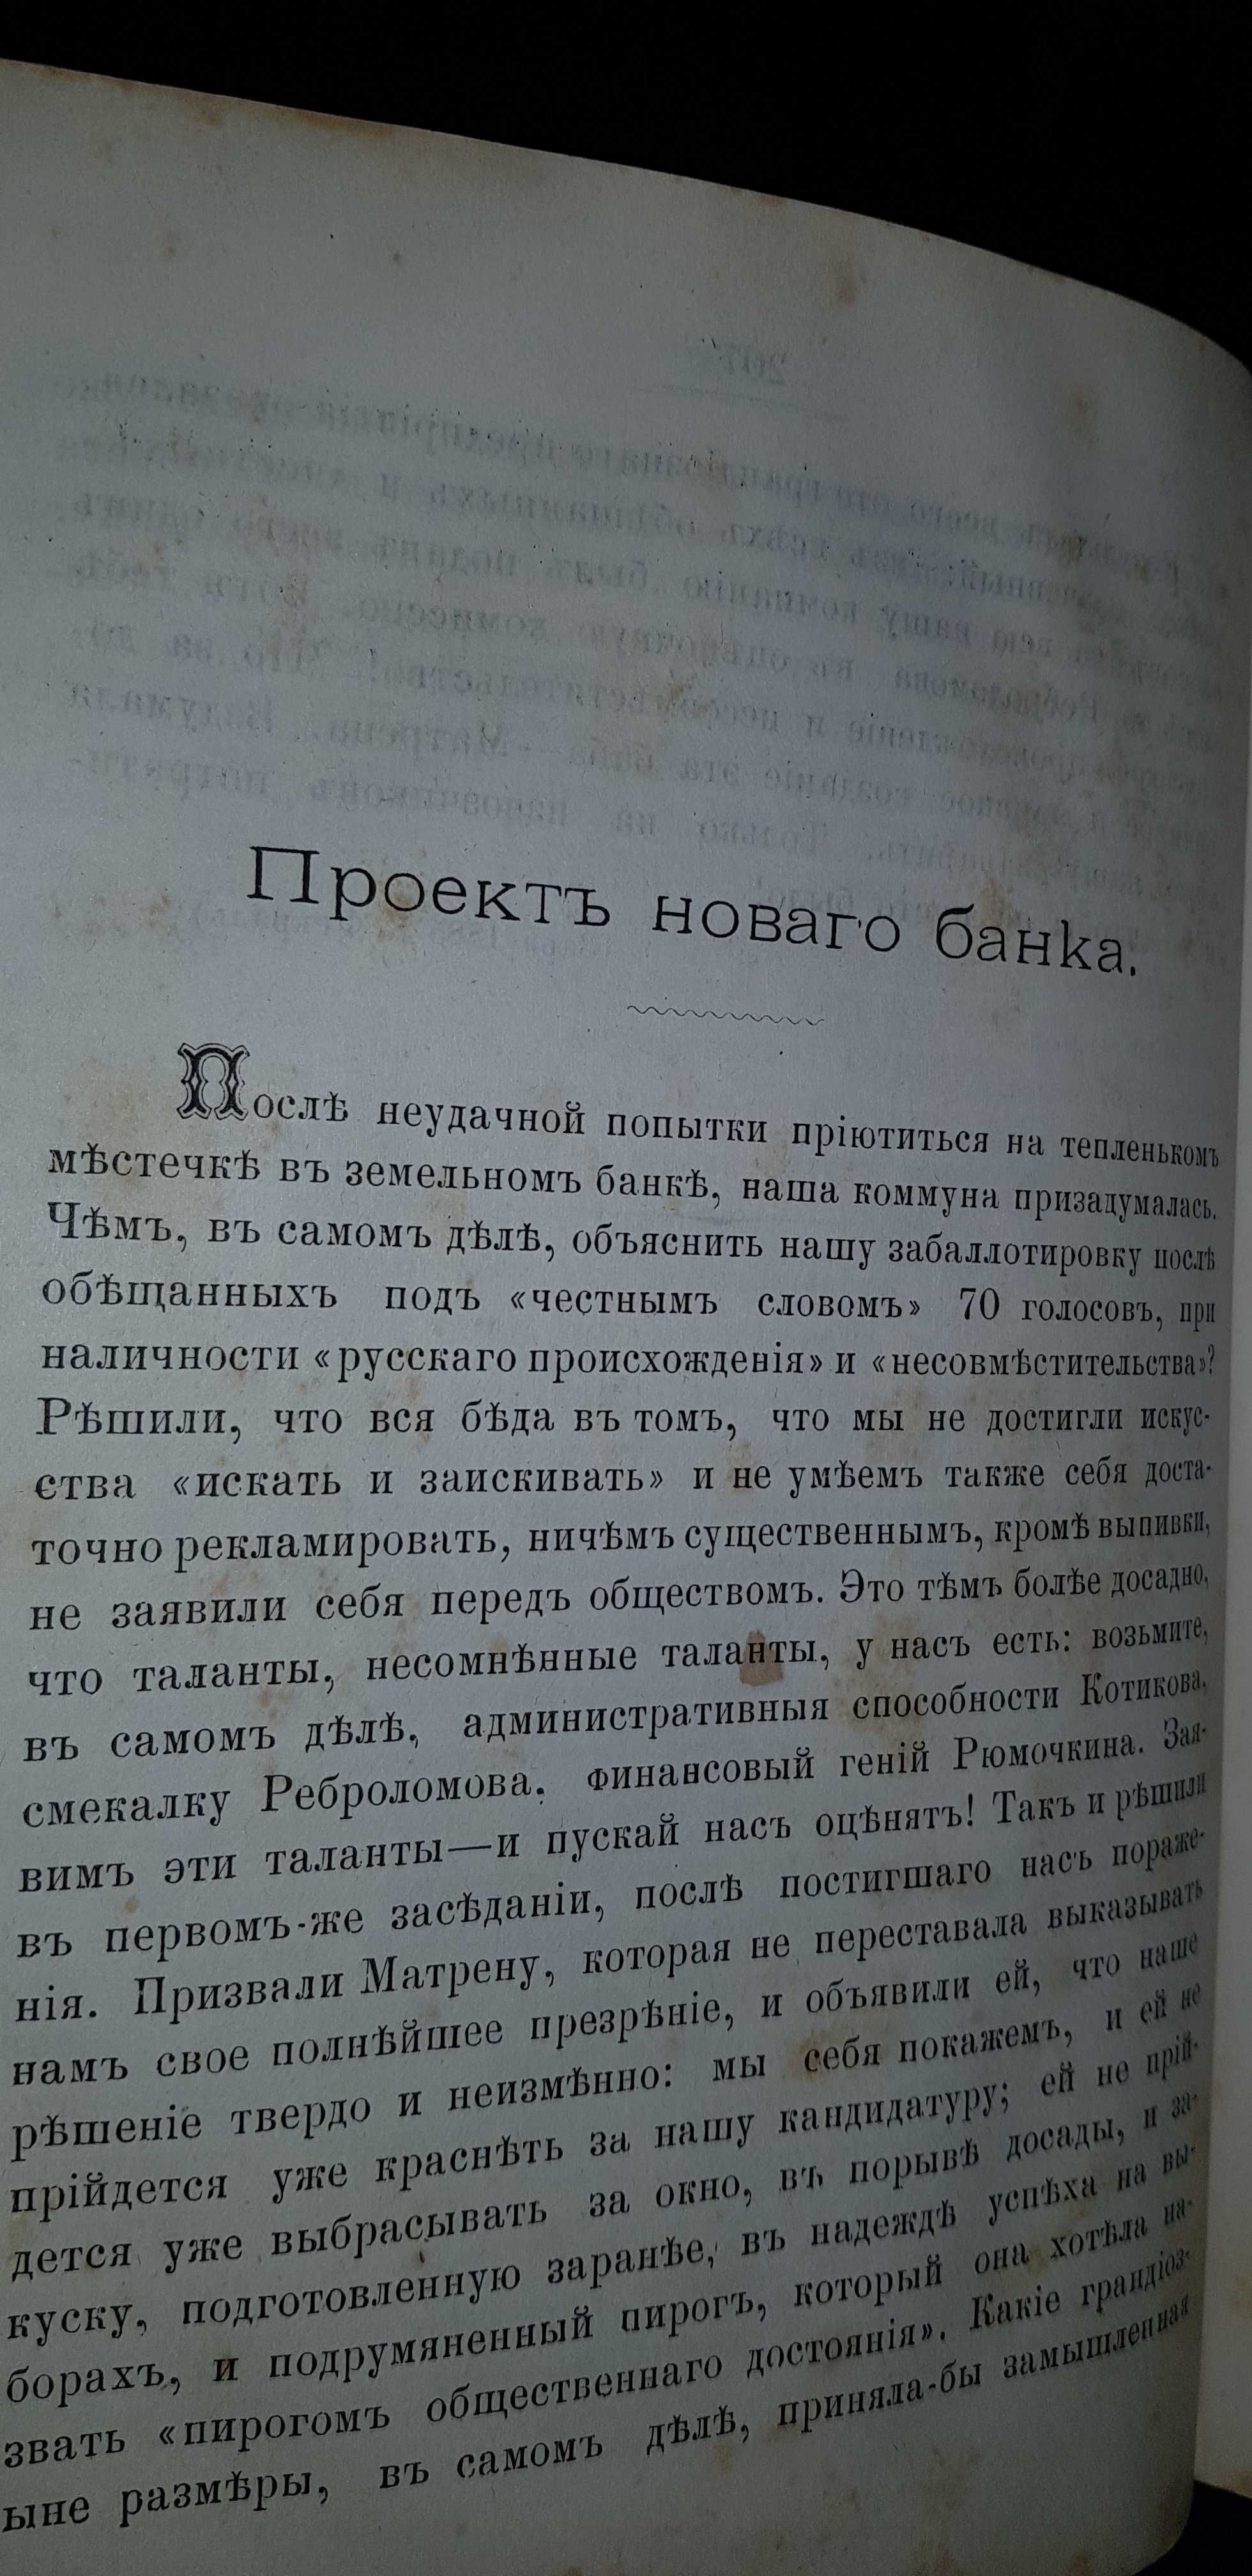 Старая антикварная книга 19 - го века